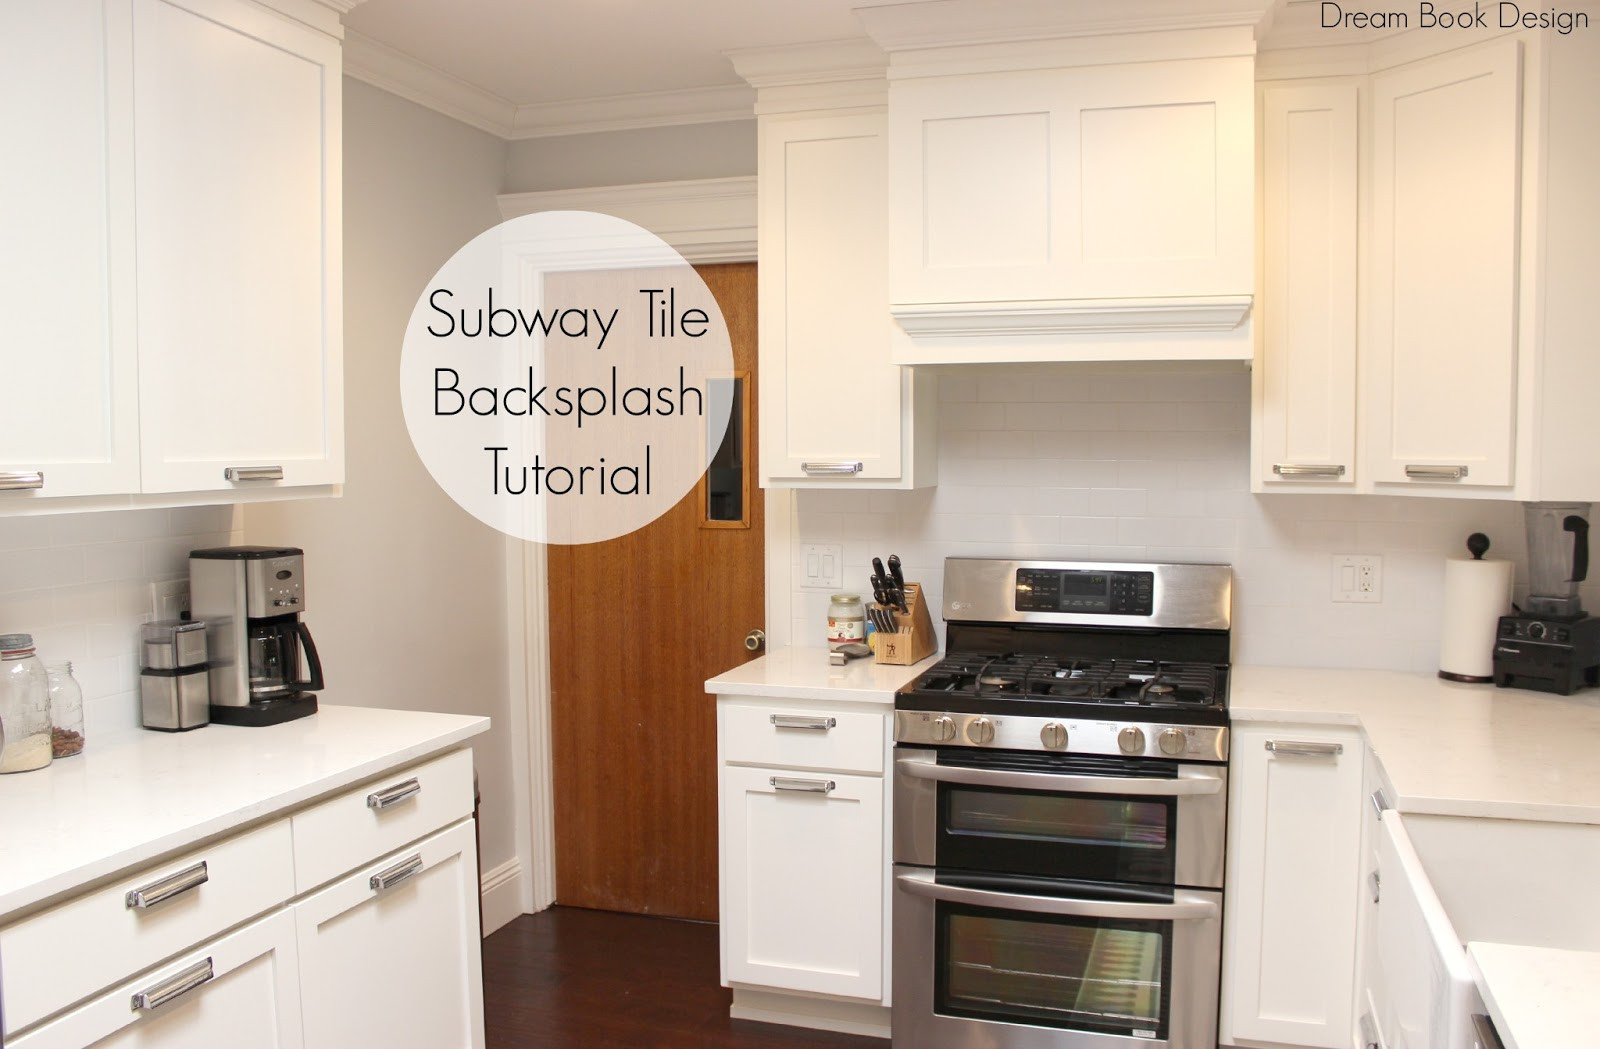 Best ideas about DIY Kitchen Tiling
. Save or Pin Easy DIY Subway Tile Backsplash Tutorial Dream Book Design Now.